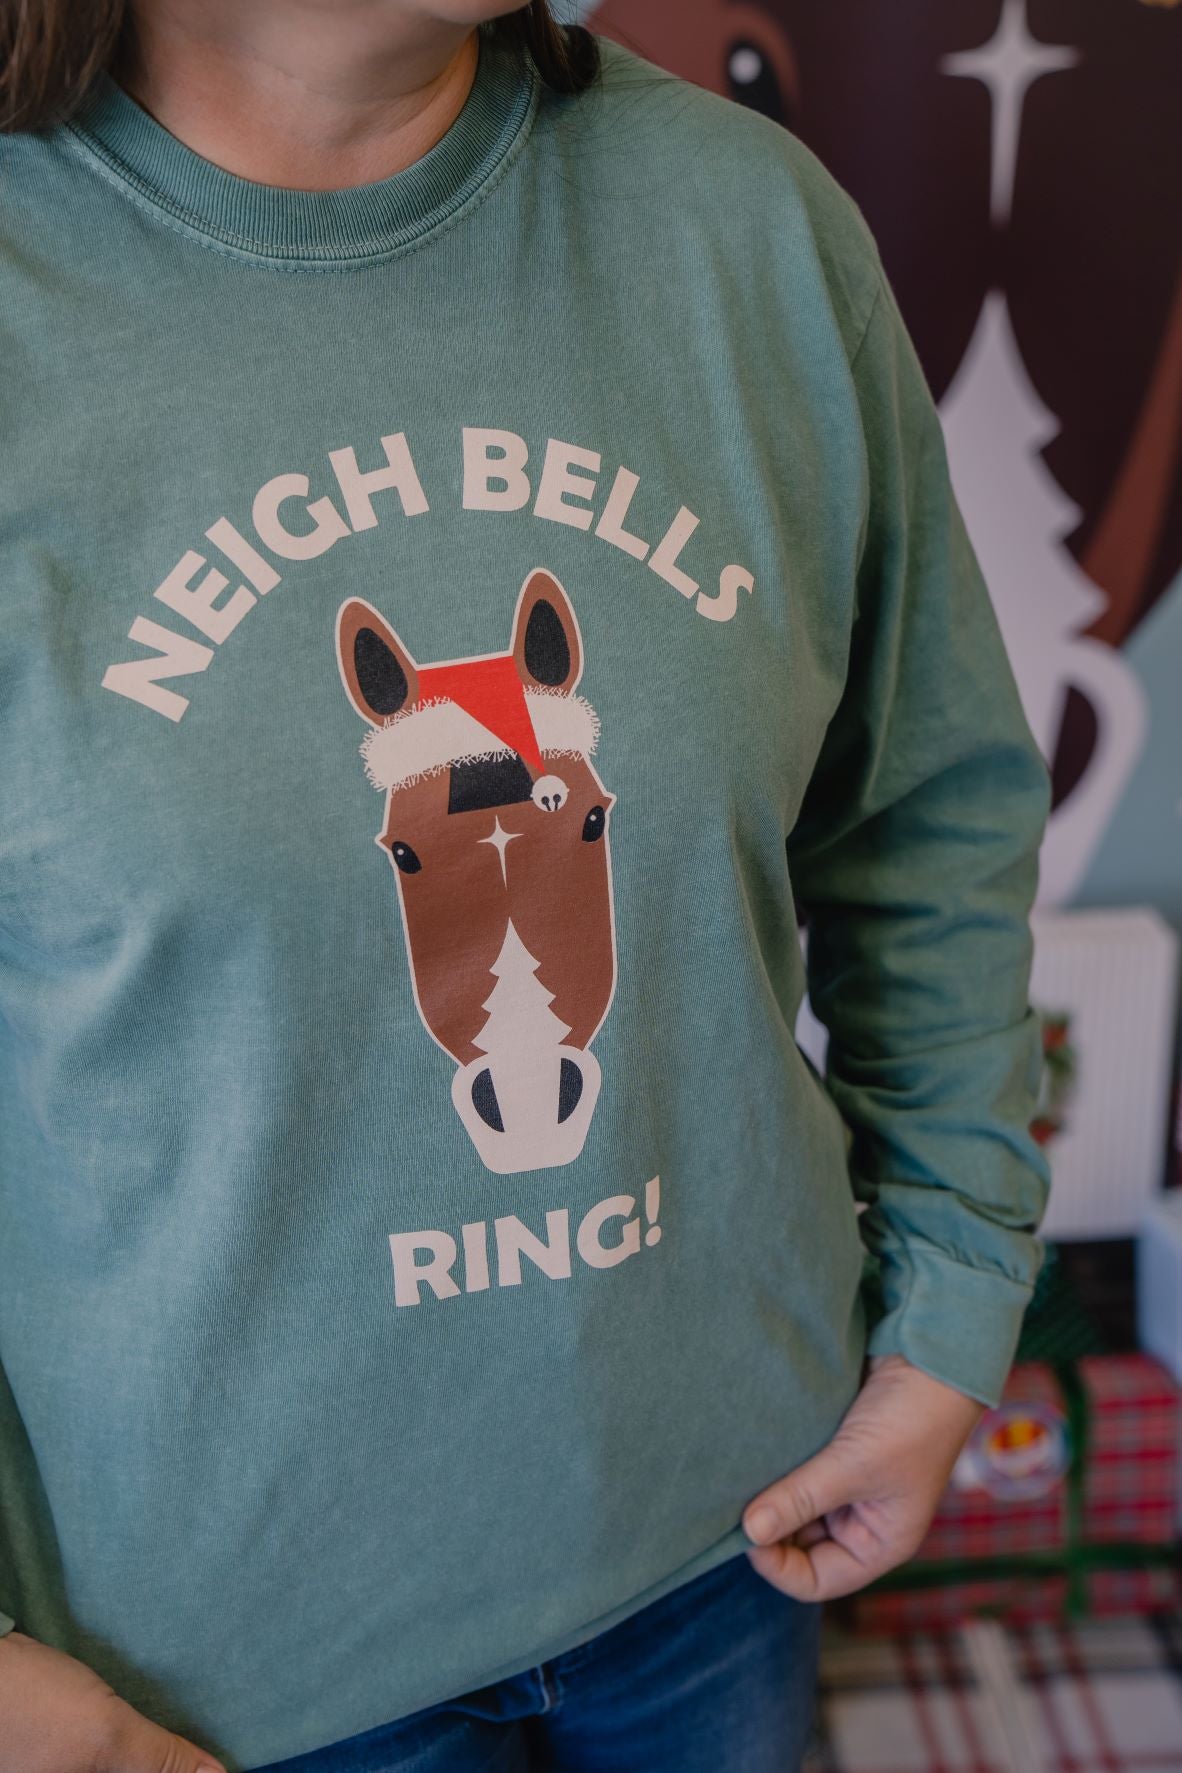 Neigh Bells Ring!